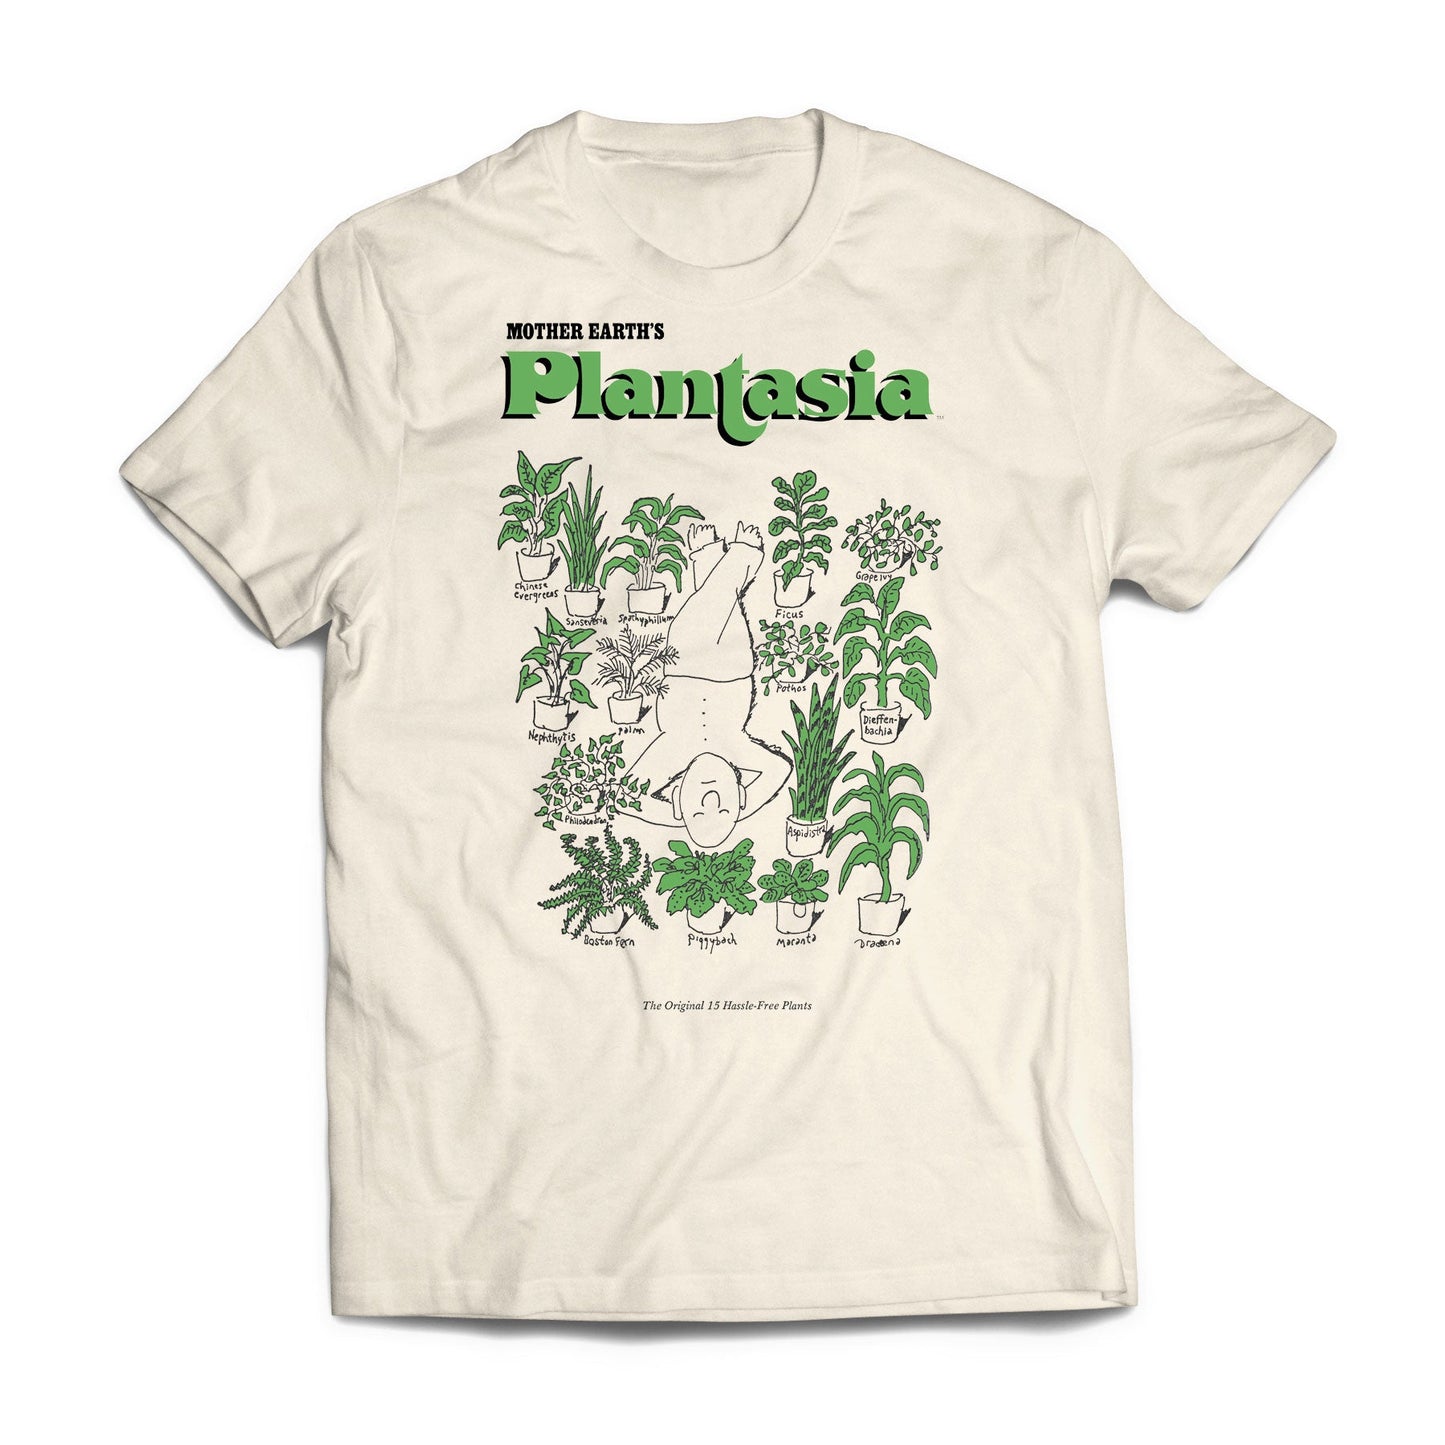 Plantasia "Man With His Plants" T-Shirt